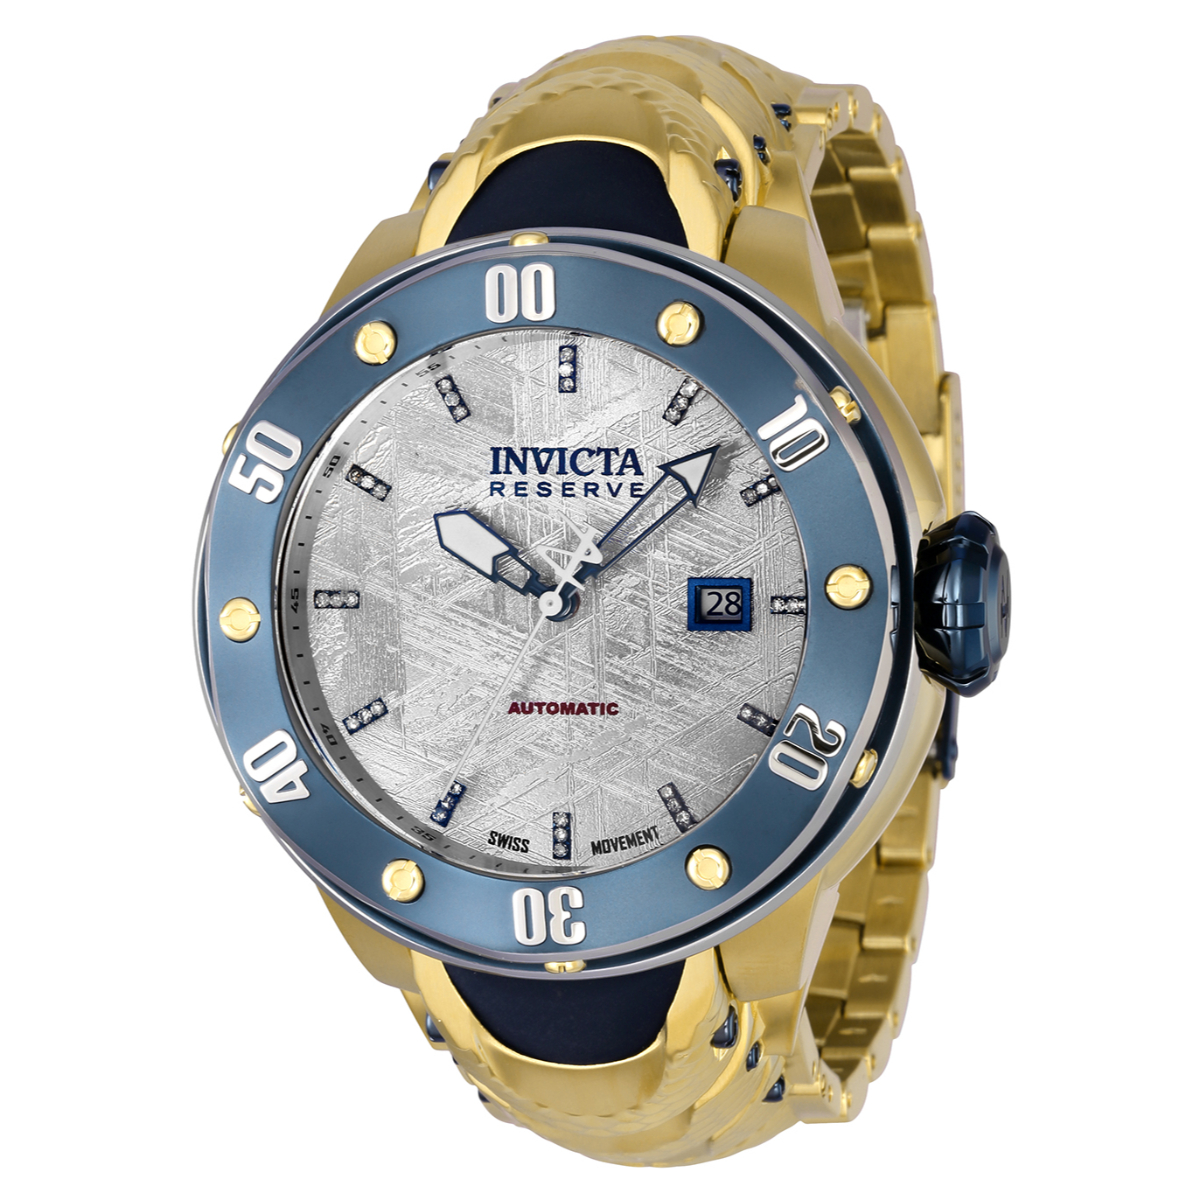 Invicta Reserve Kraken Automatic .1512 Carat Diamond Men's Watch w/Meteorite Dial - 54mm, Gold, Blue (36614)